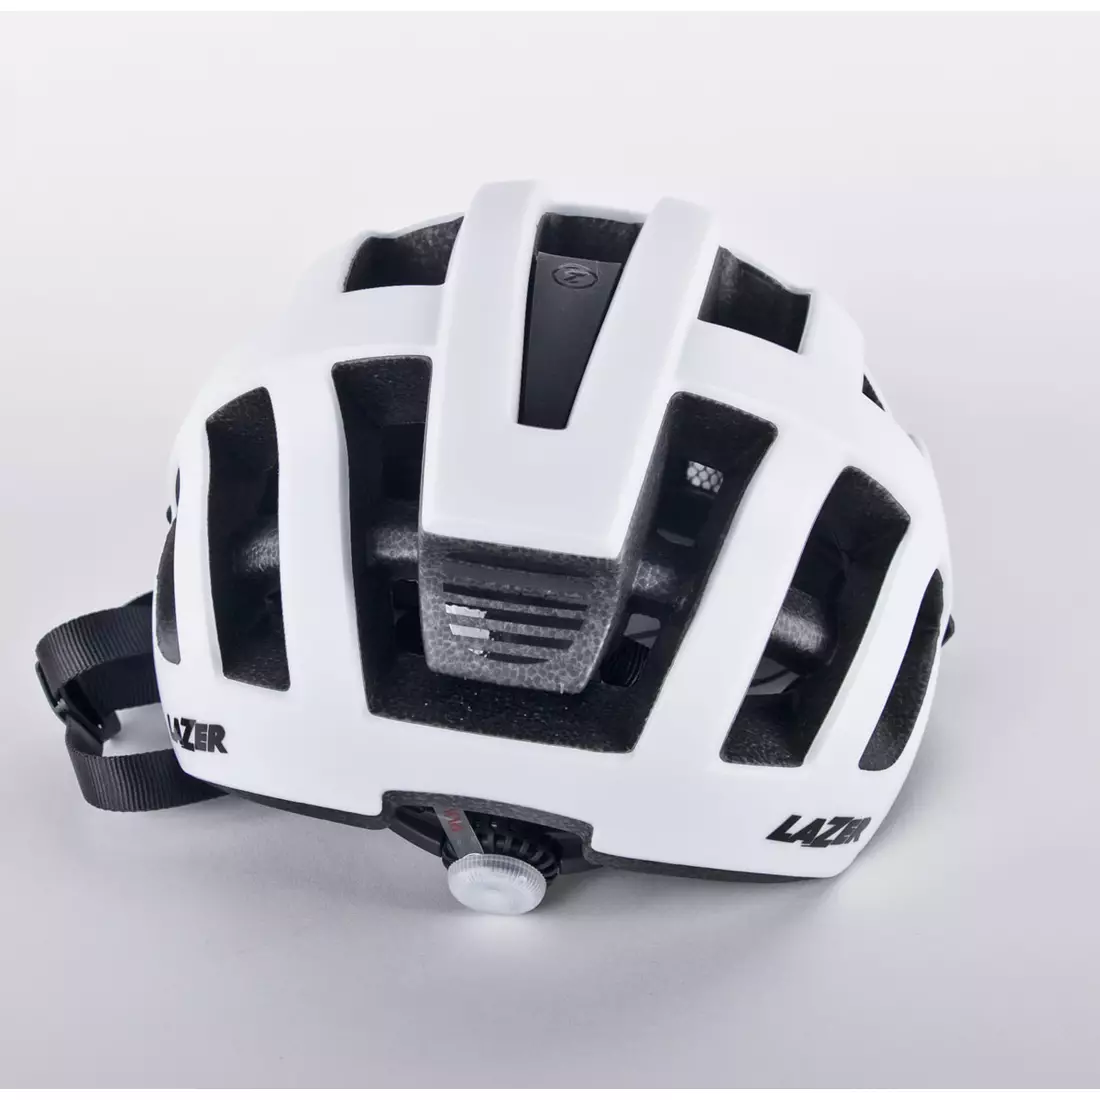 Cyklistická helma LAZER Compact DLX LED síťka proti hmyzu červená bílá mat